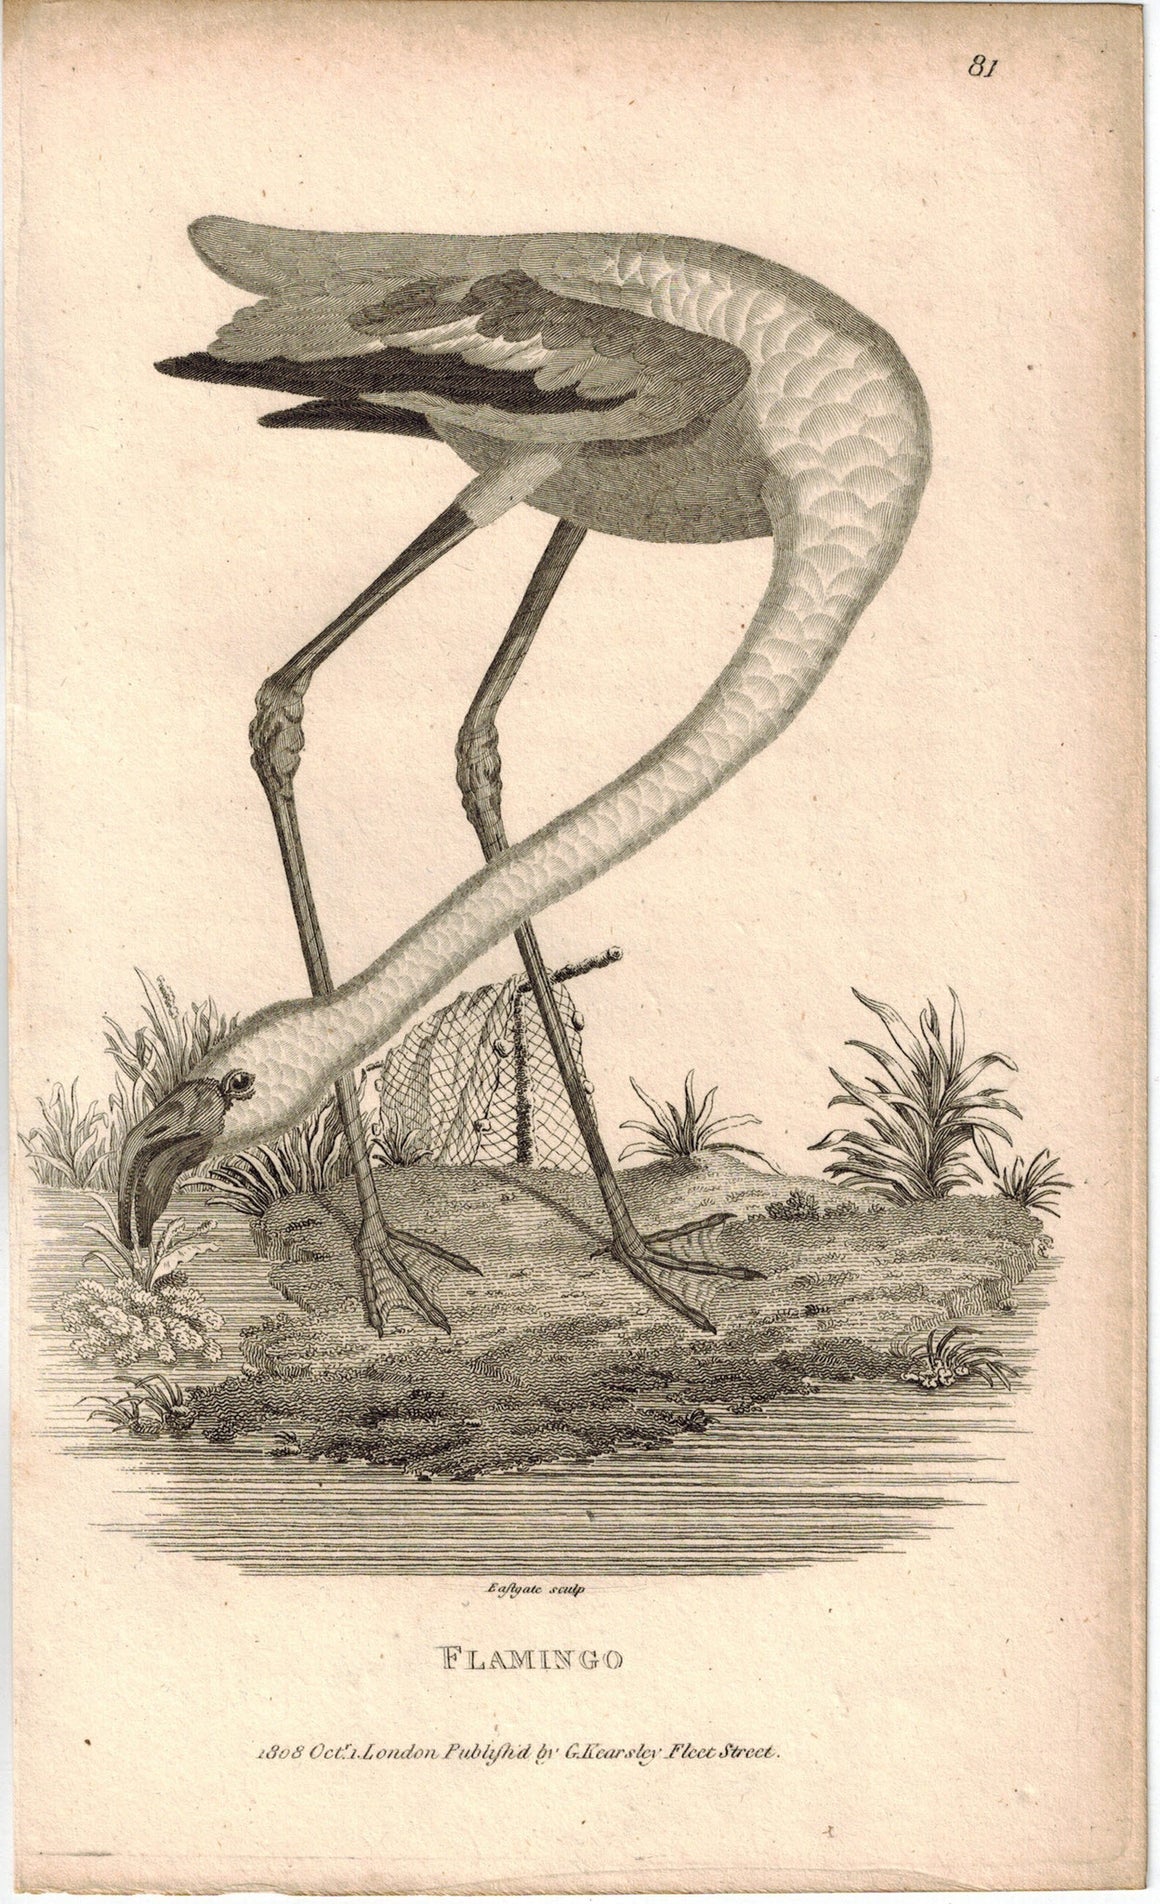 Flamingo Print 1809 George Shaw Original Engraving